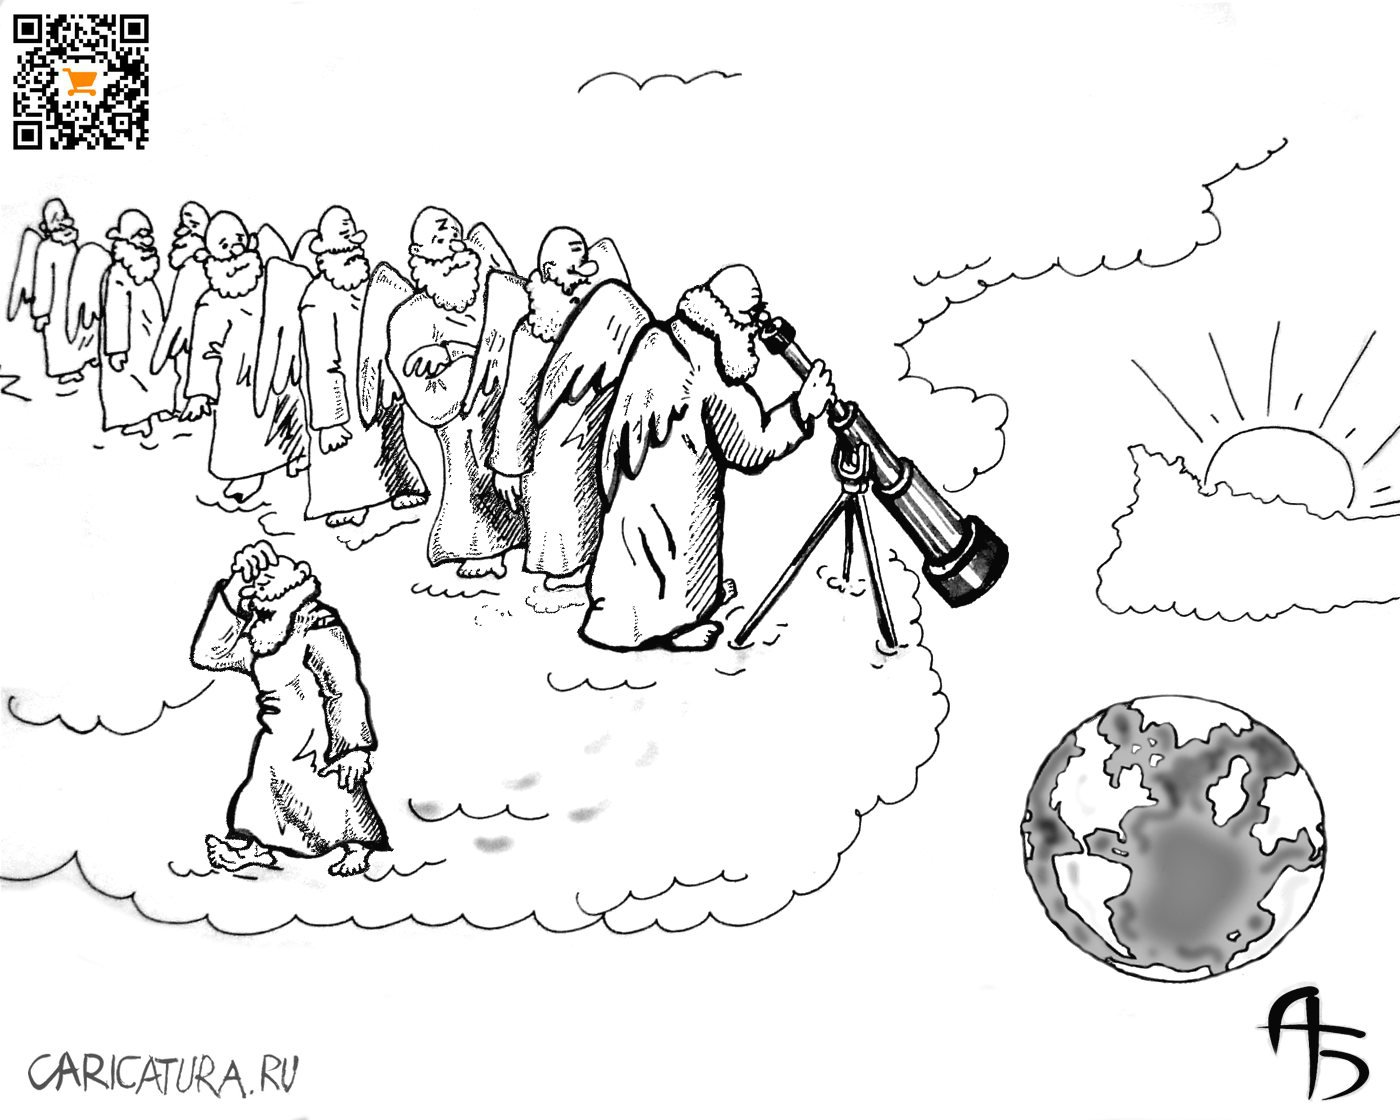 Карикатура "Что делать?", Александр Богданов